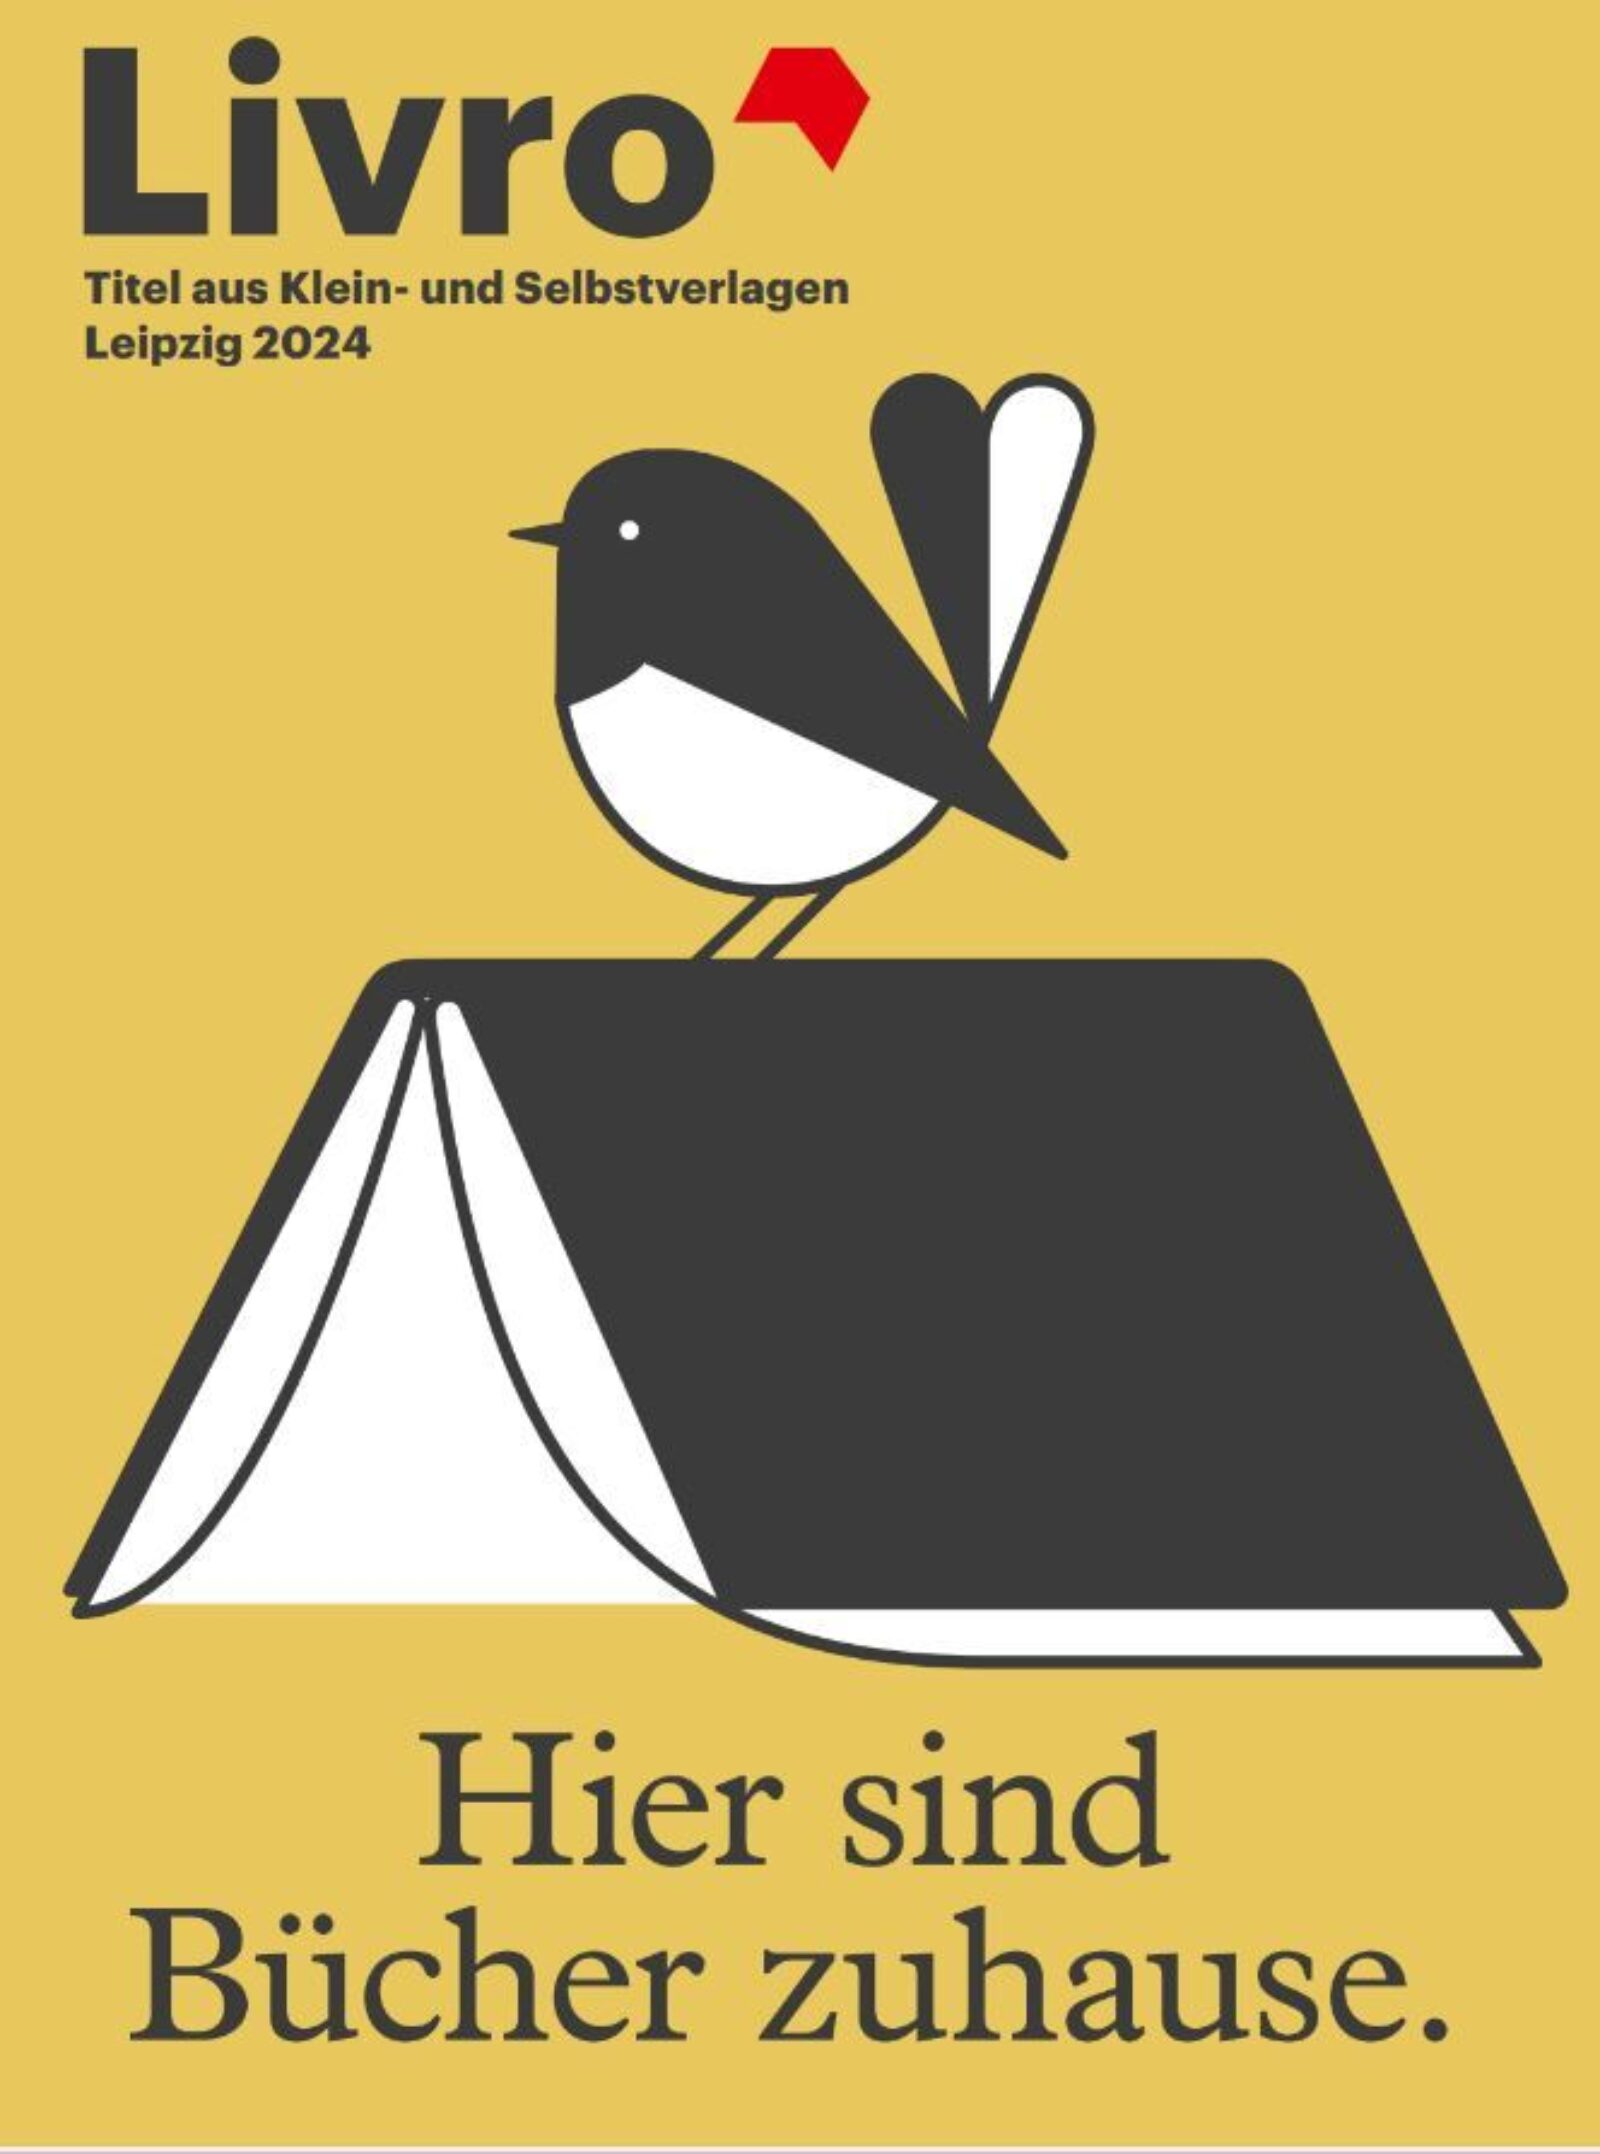 Livro-Katalog Leipziger Buchmesse 2024